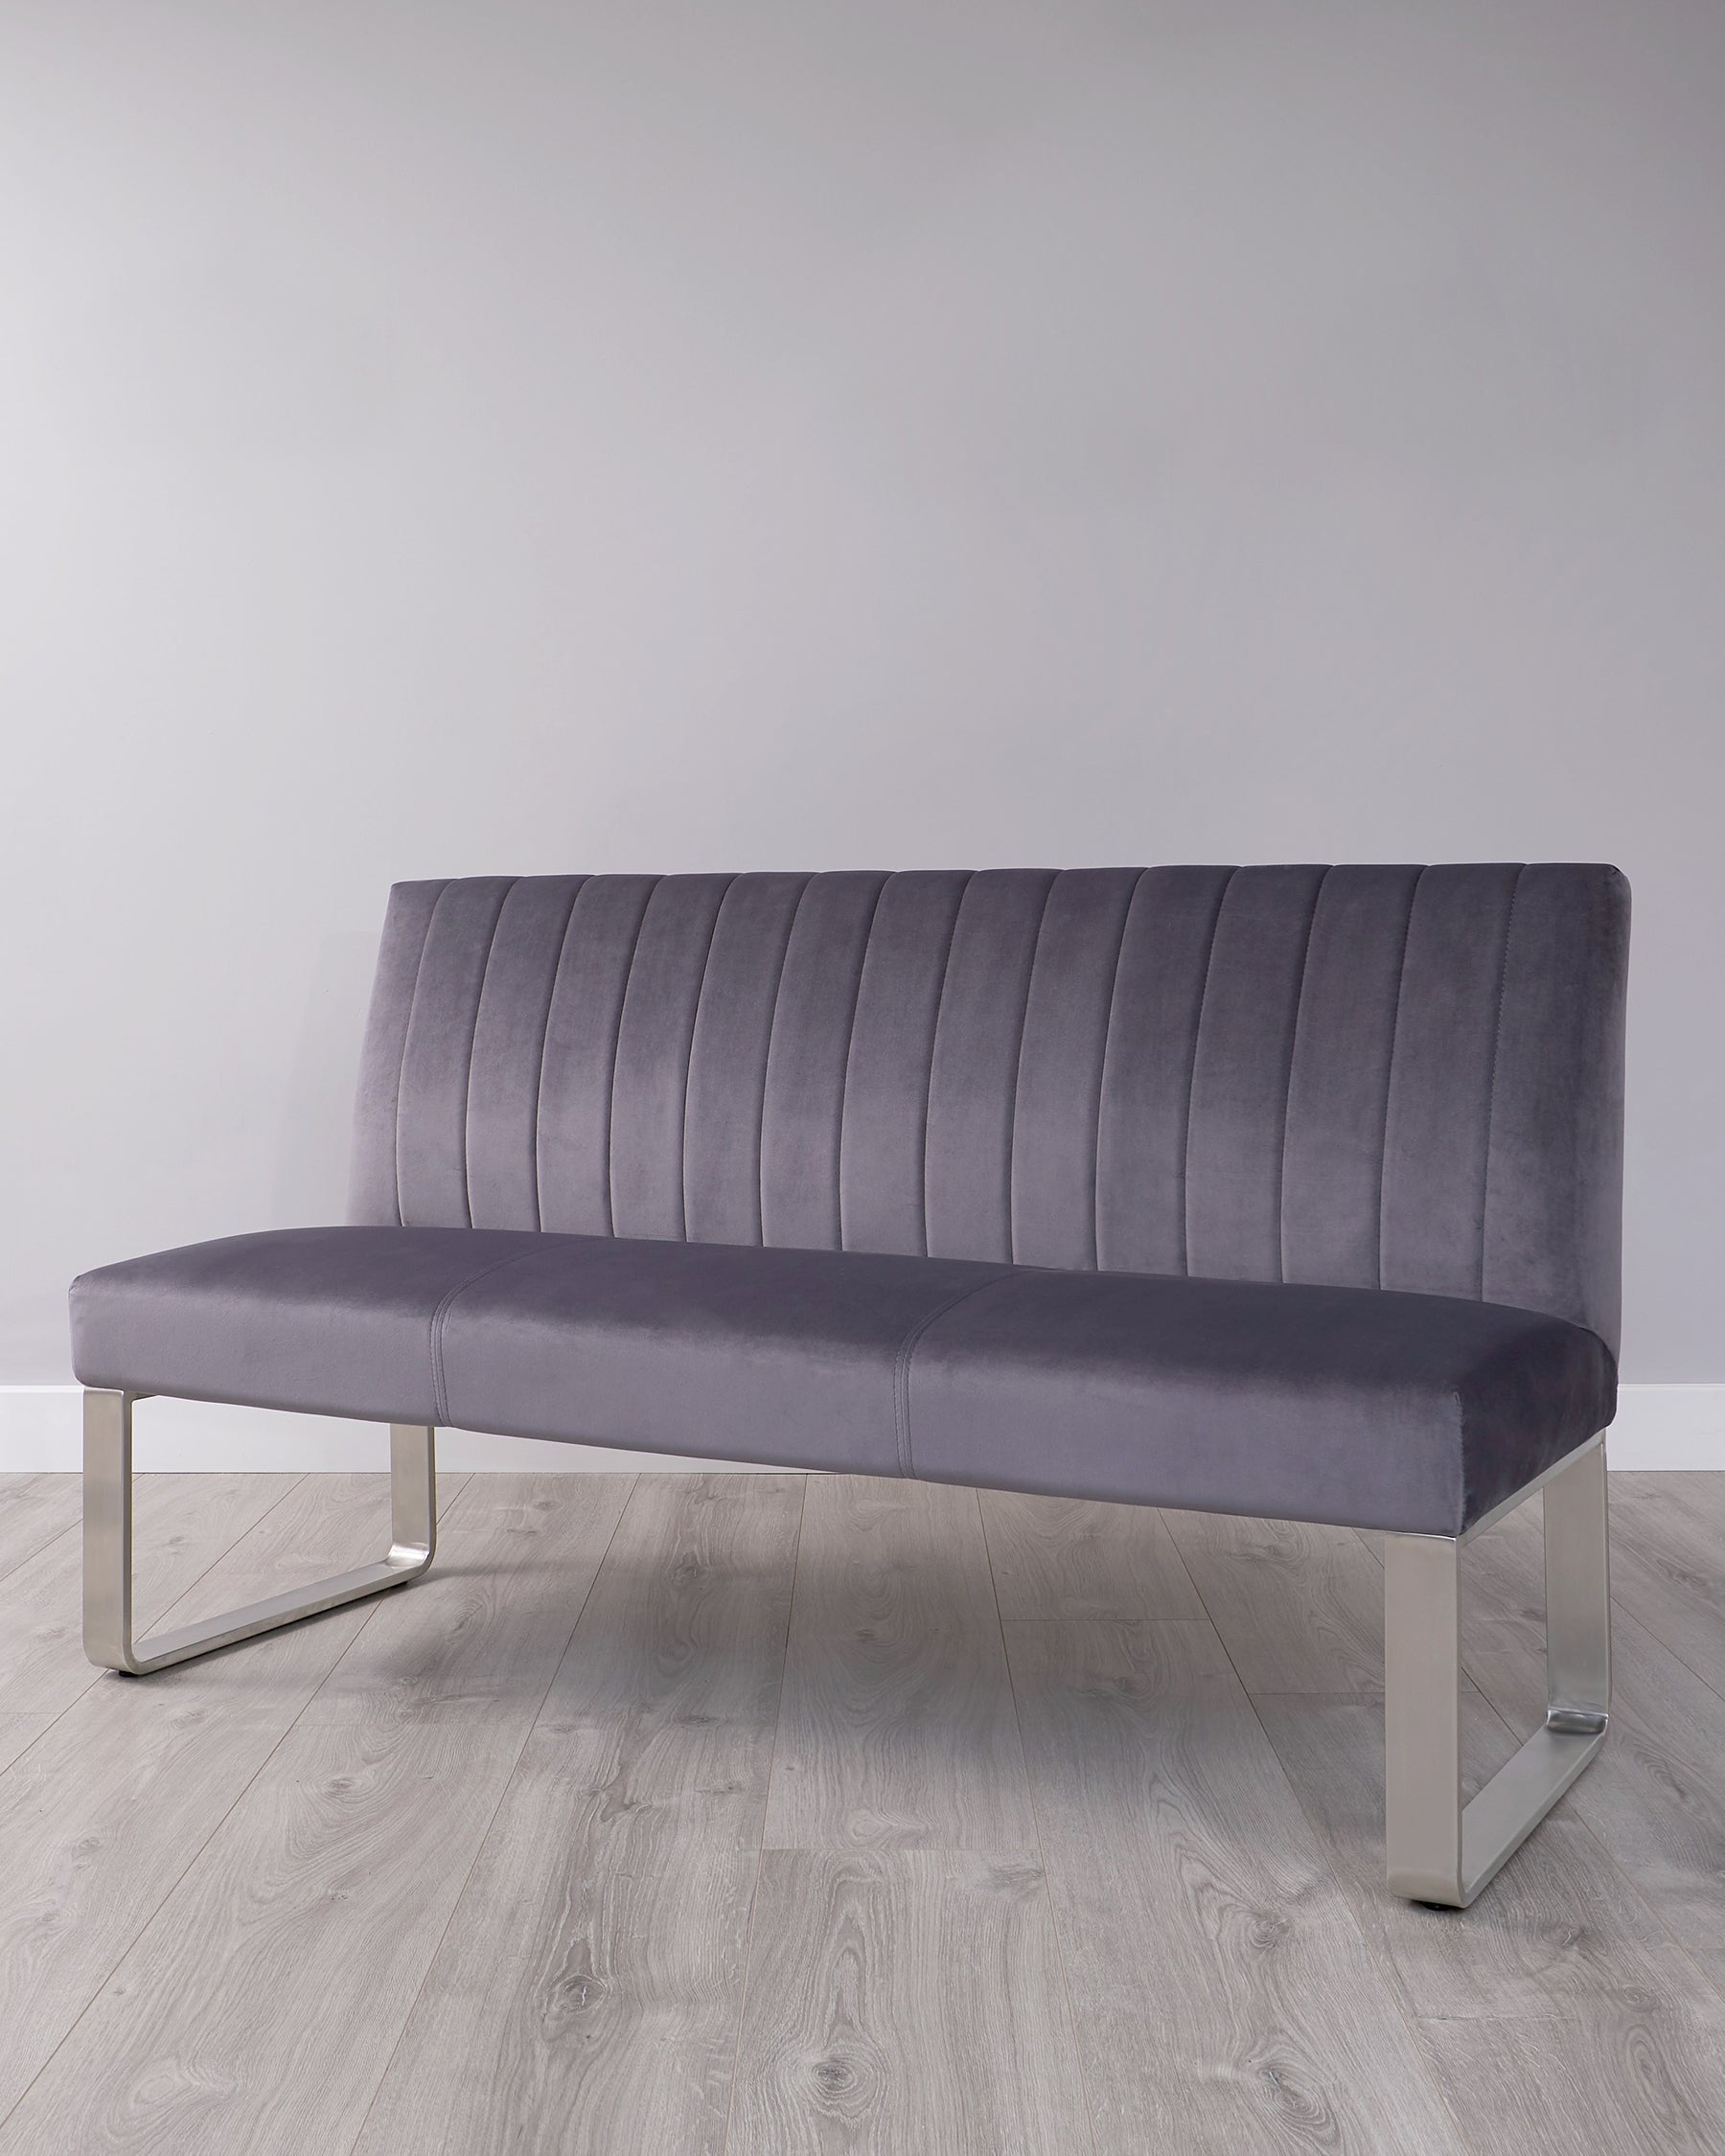 ophelia 3 seater velvet stainless steel bench with backrest dark grey